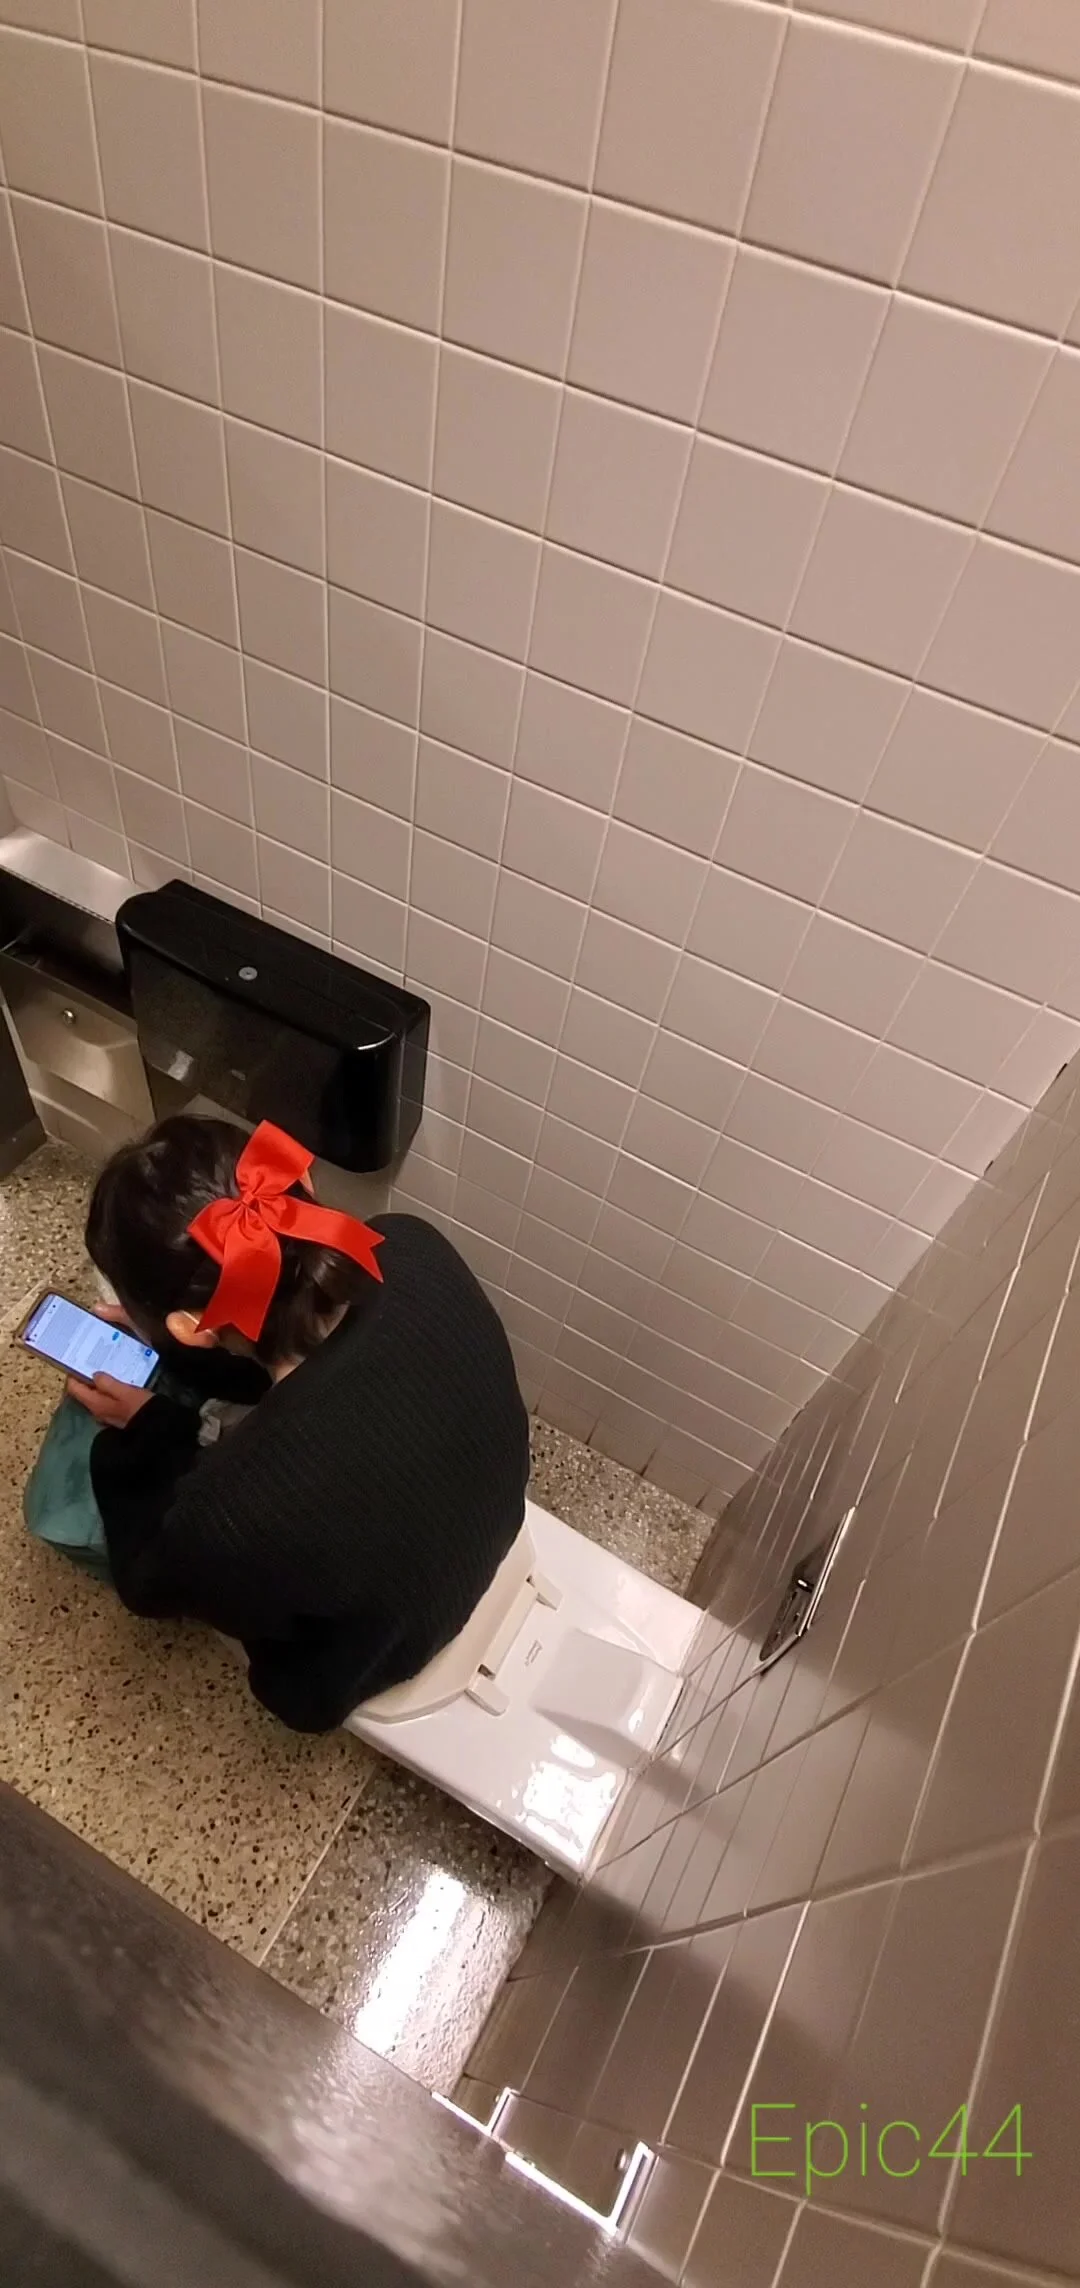 public bathroom voyeurism women shitting